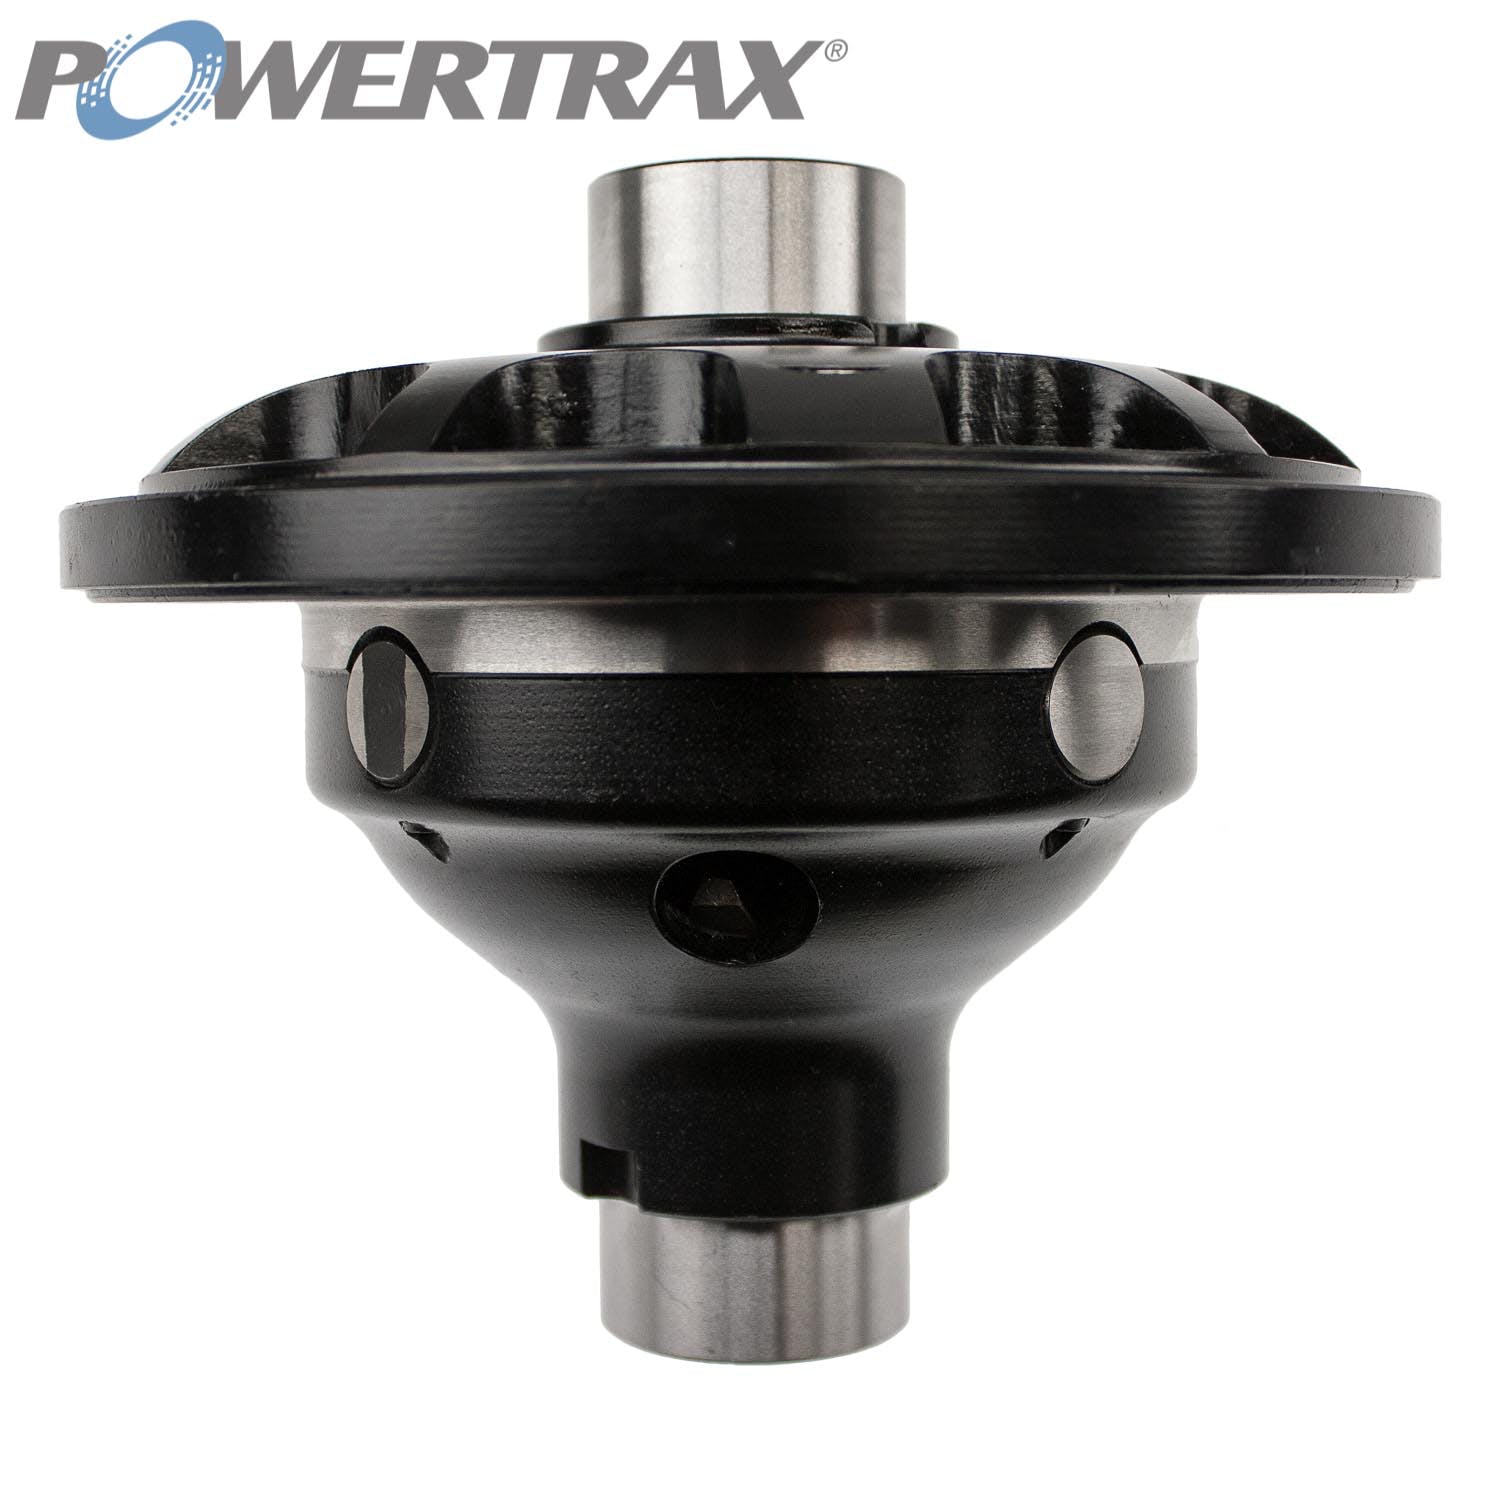 PowerTrax LS108028 Powertrax - Grip LS Traction System